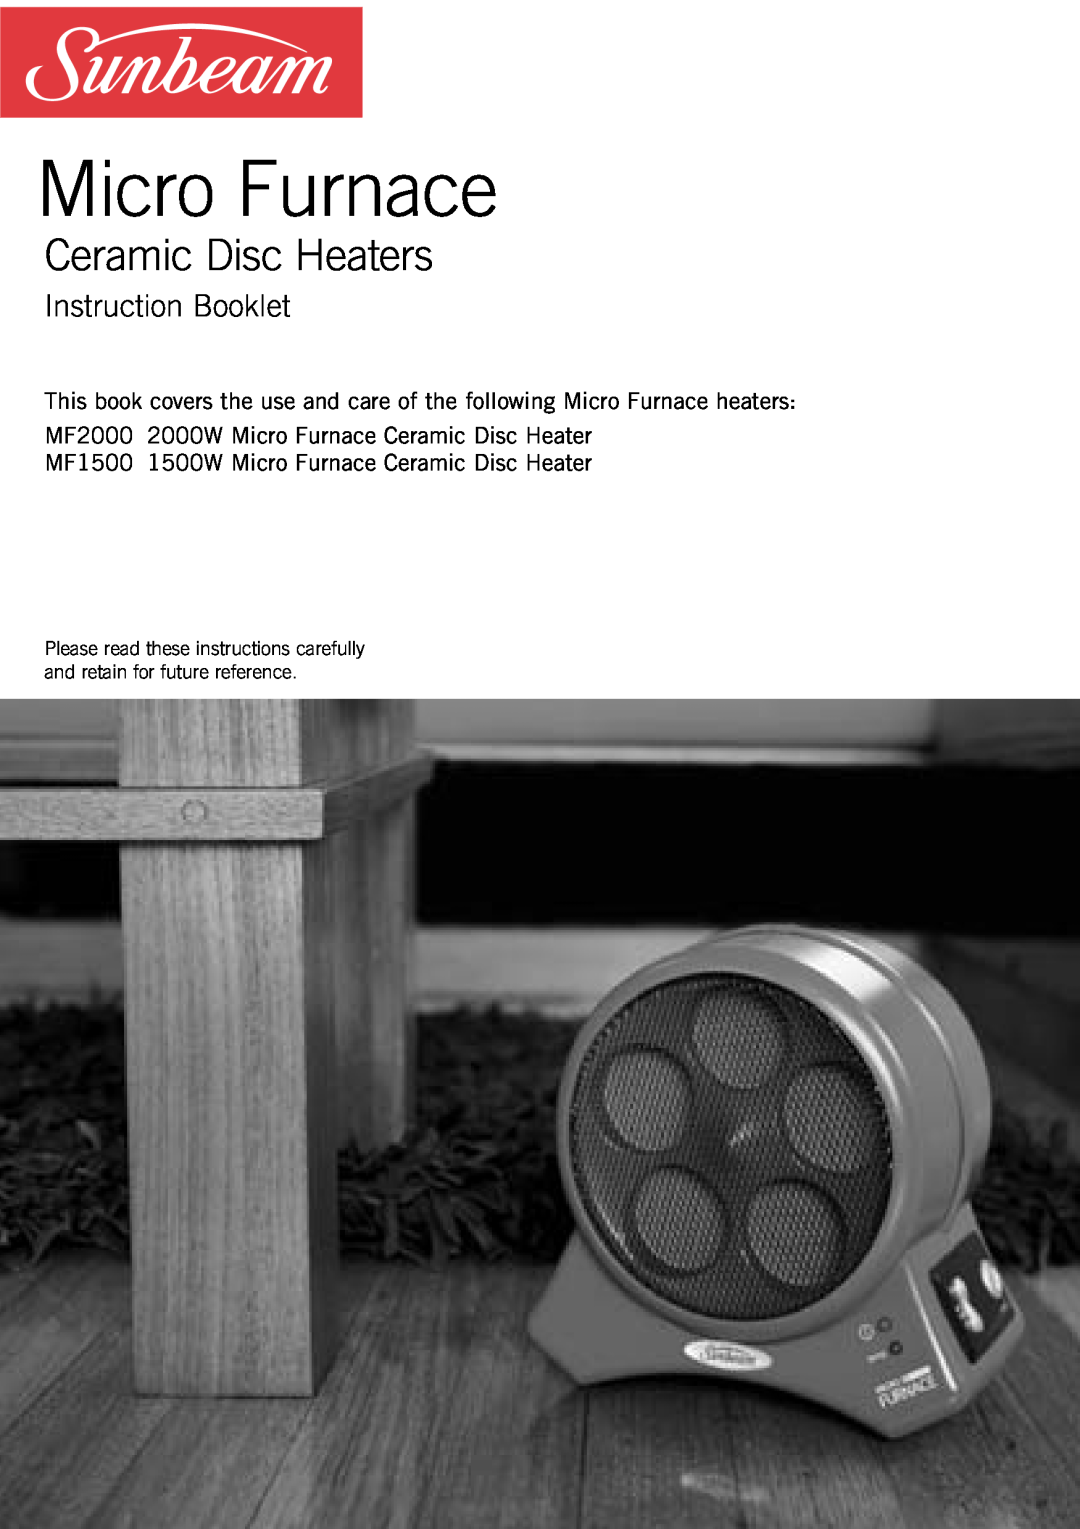 Sunbeam Bedding MF1500, MF2000 manual Instruction Booklet, Micro Furnace, Ceramic Disc Heaters 